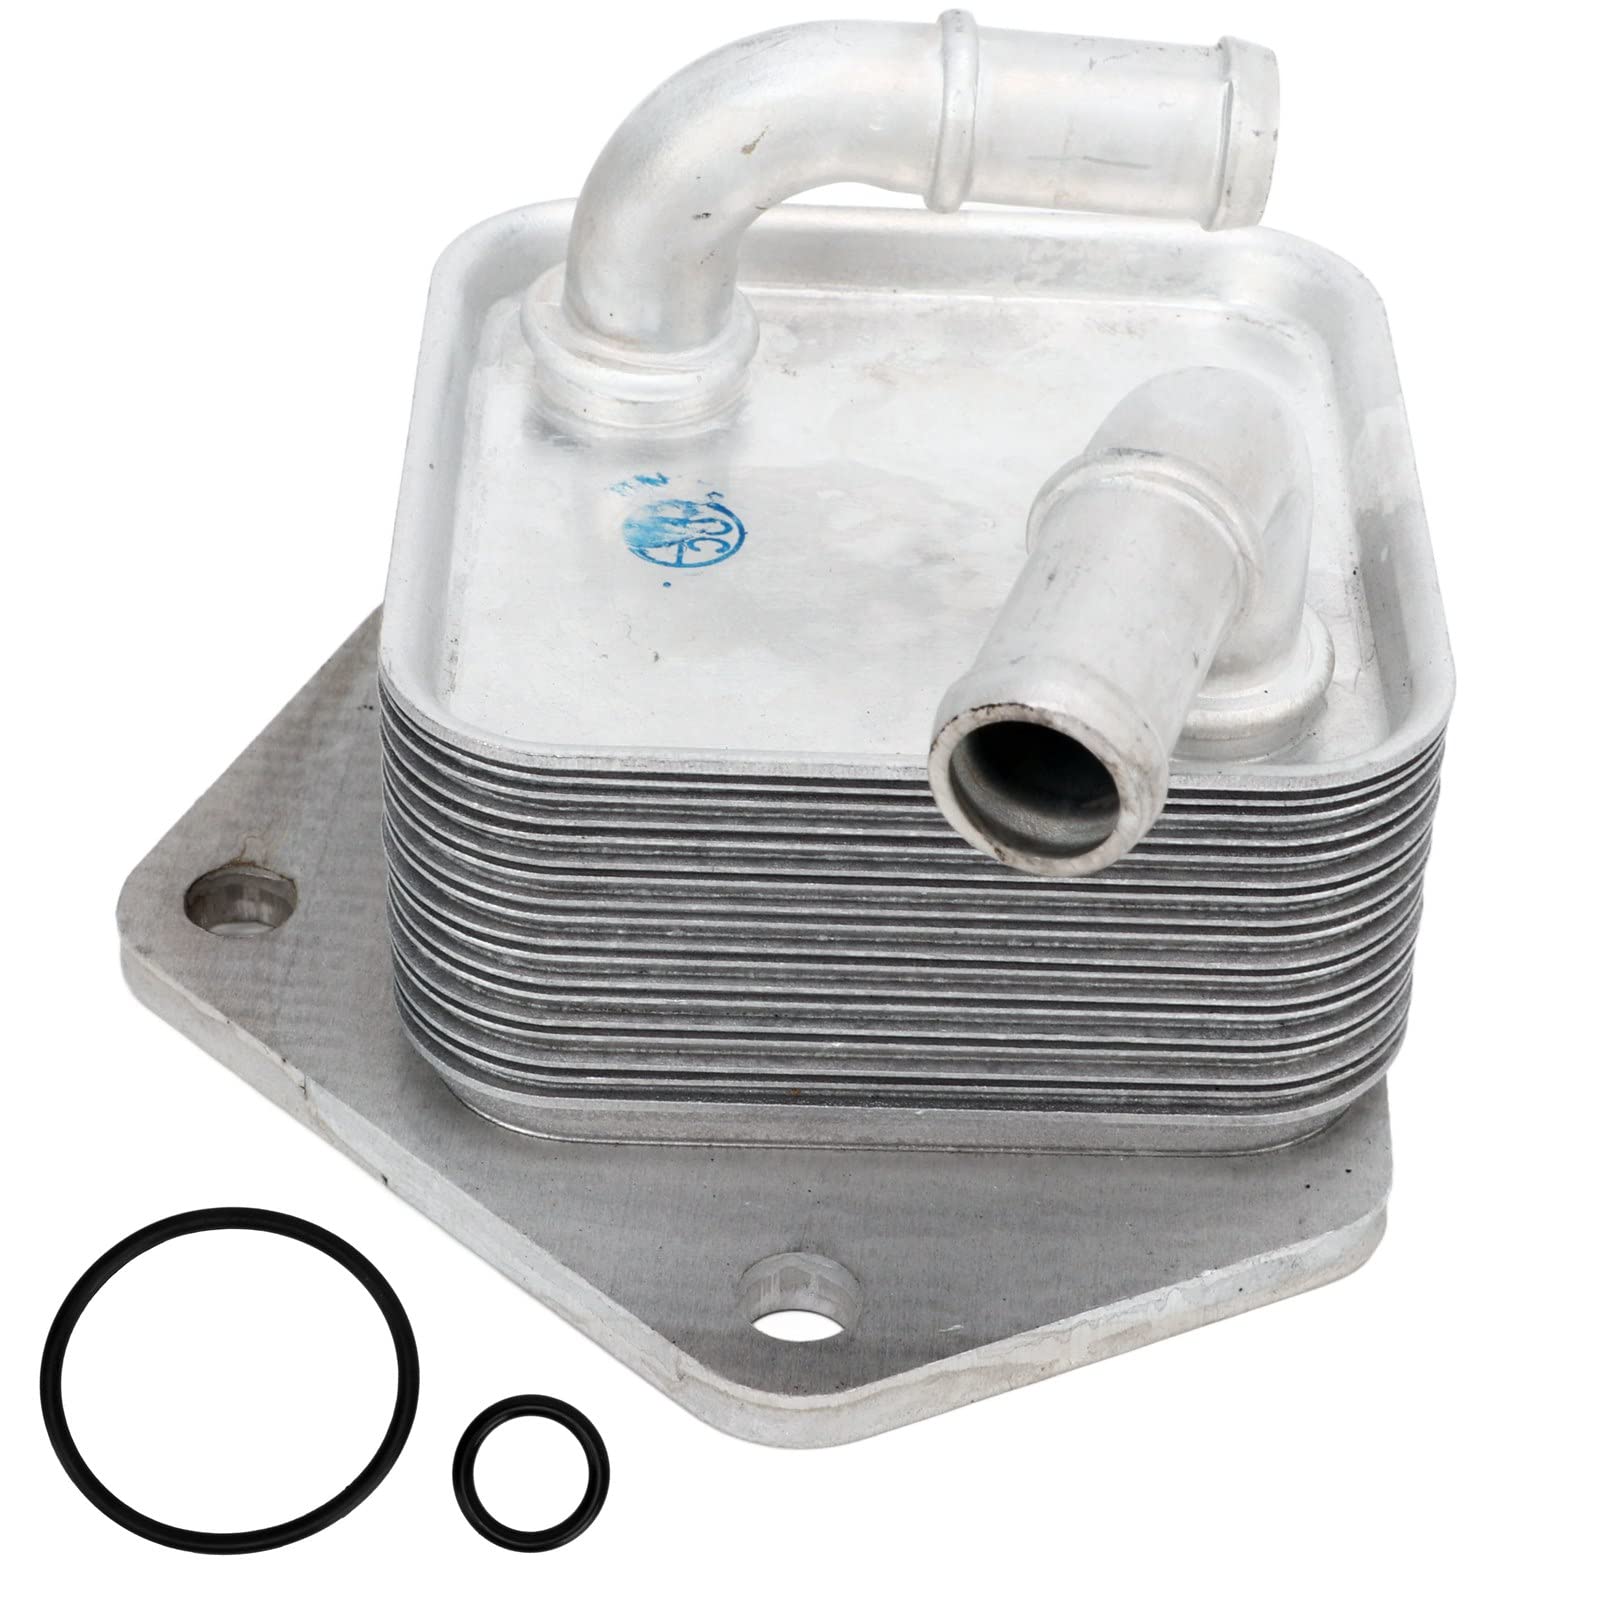 Xeamotor Getriebeölflüssigkeitskühler 25560 5LJ 004 Wärmer CVTF Getriebekühler für Accord Civic CR V Turbocharged von Xeamotor